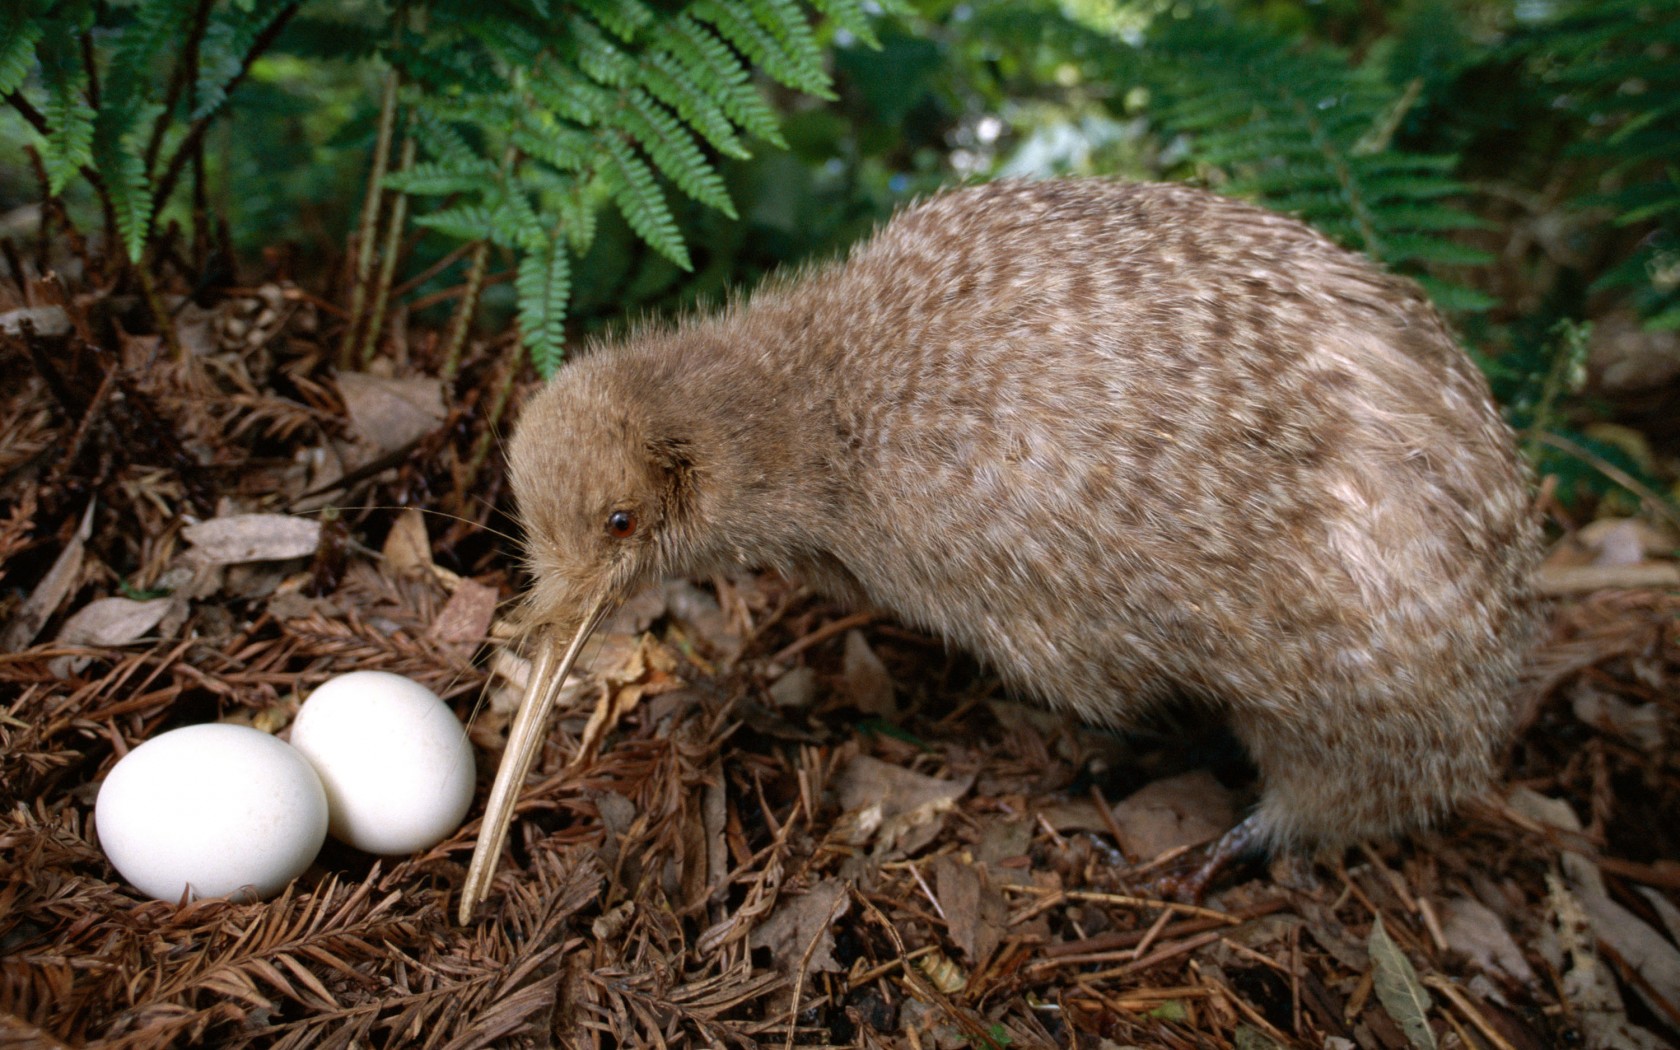 Kiwi with Eggs